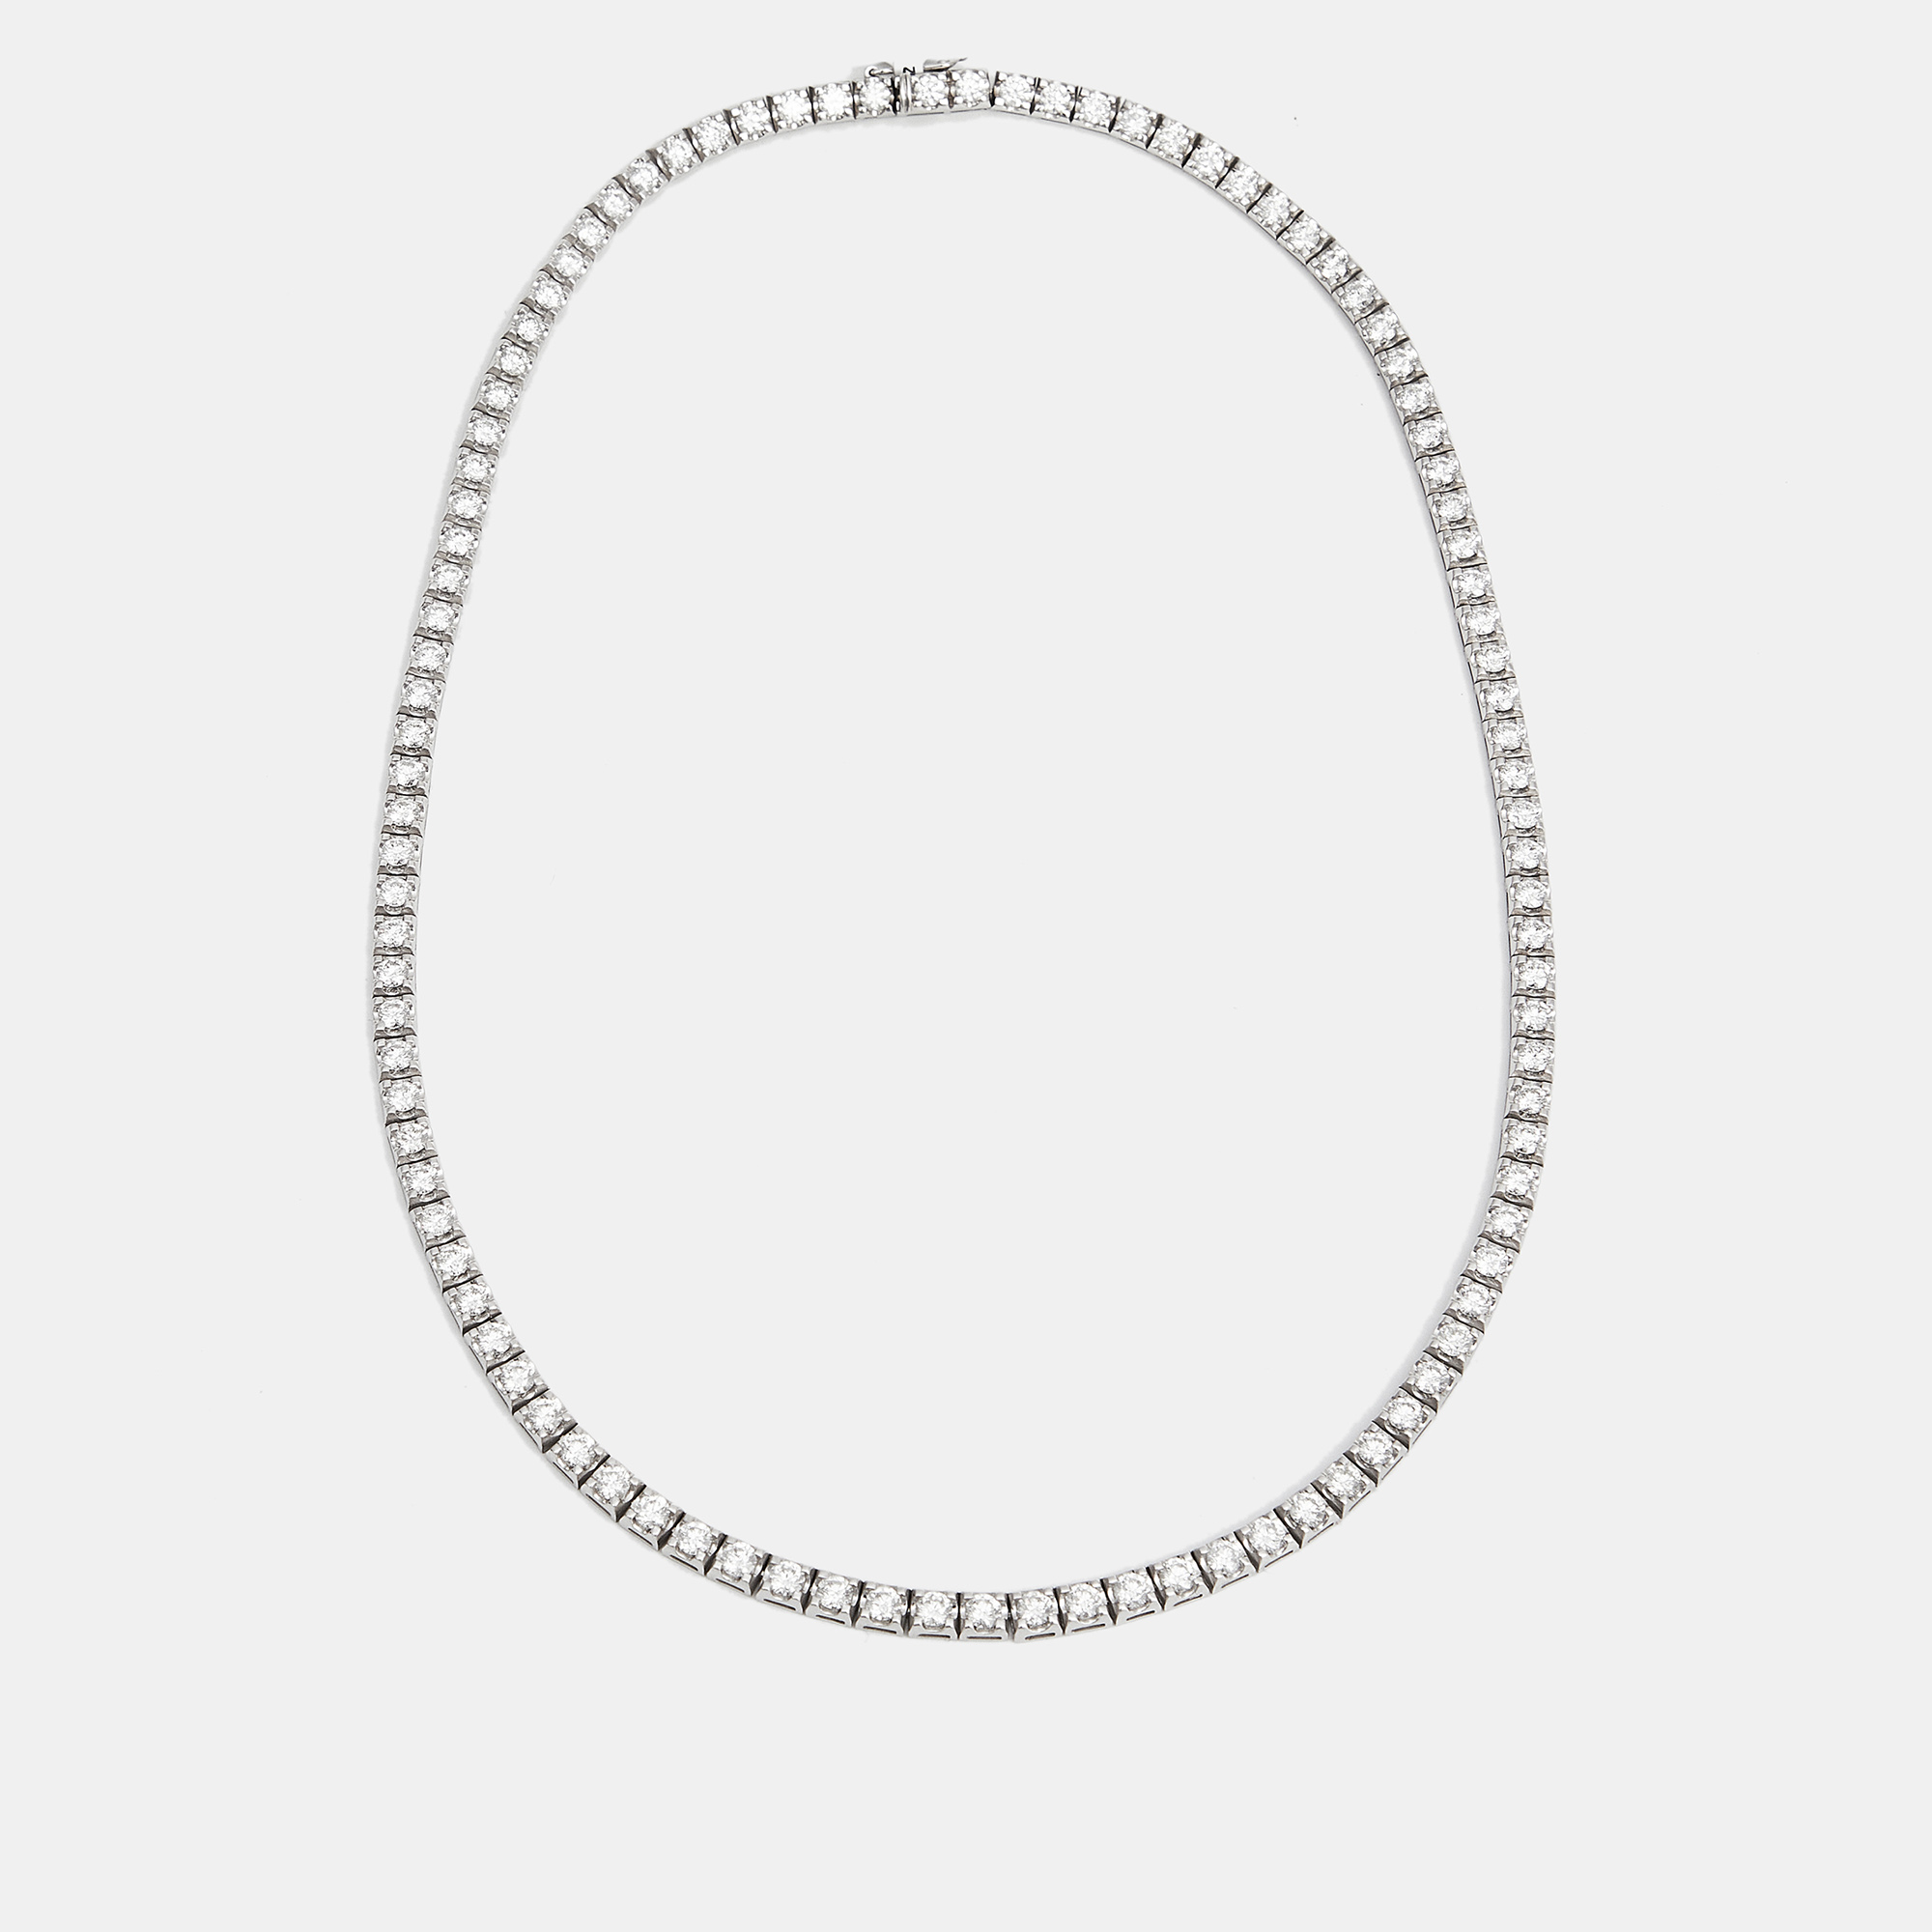 The diamond edit elegant diamond 12.75 cts 18k white gold tennis necklace